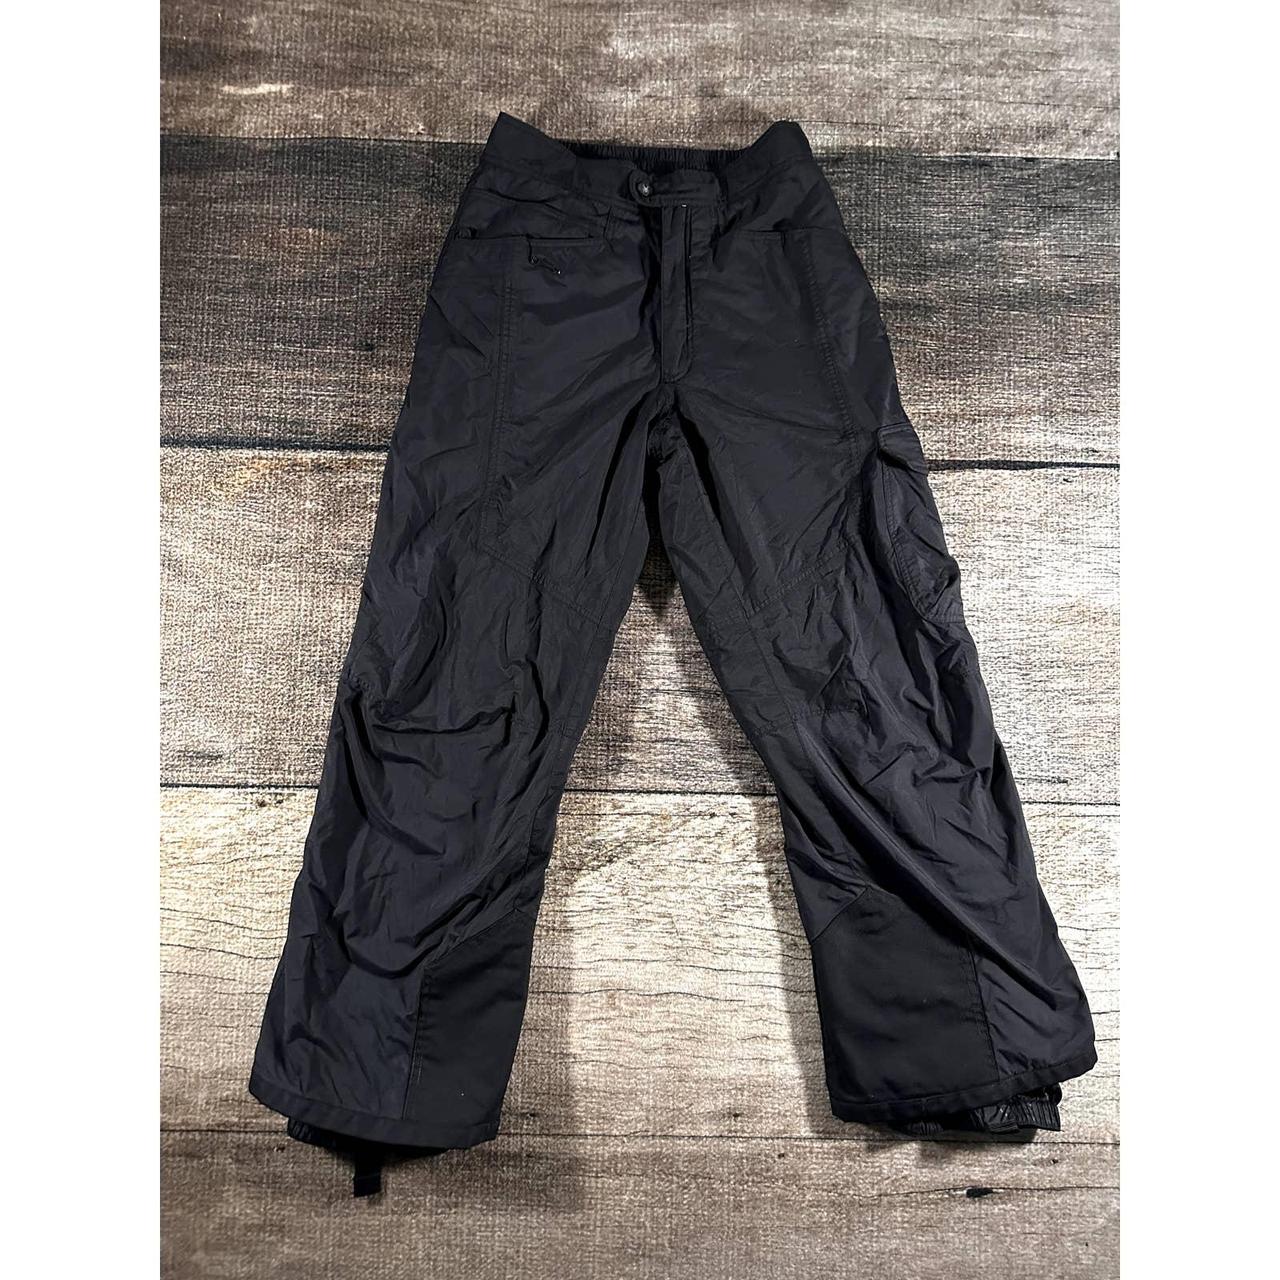 Spyder Mens XT 5,000 Insulated Black Snow Pants. - Depop